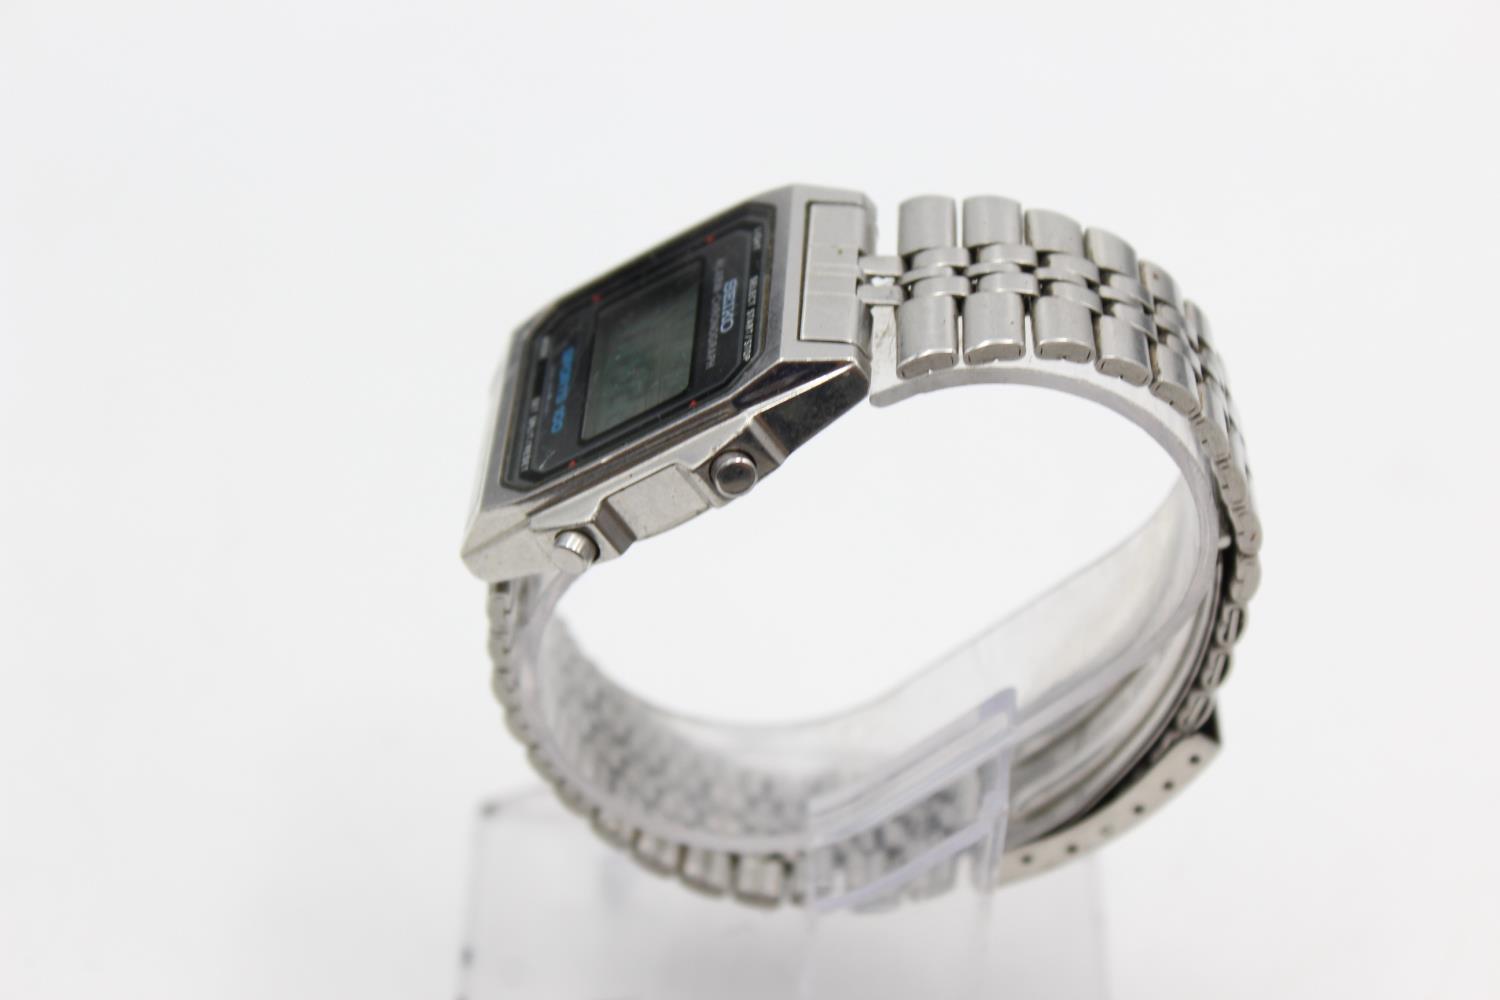 Gents SEIKO SPORTS 100 Digital Alarm Chronograph WRISTWATCH Quartz WORKING - Image 3 of 4